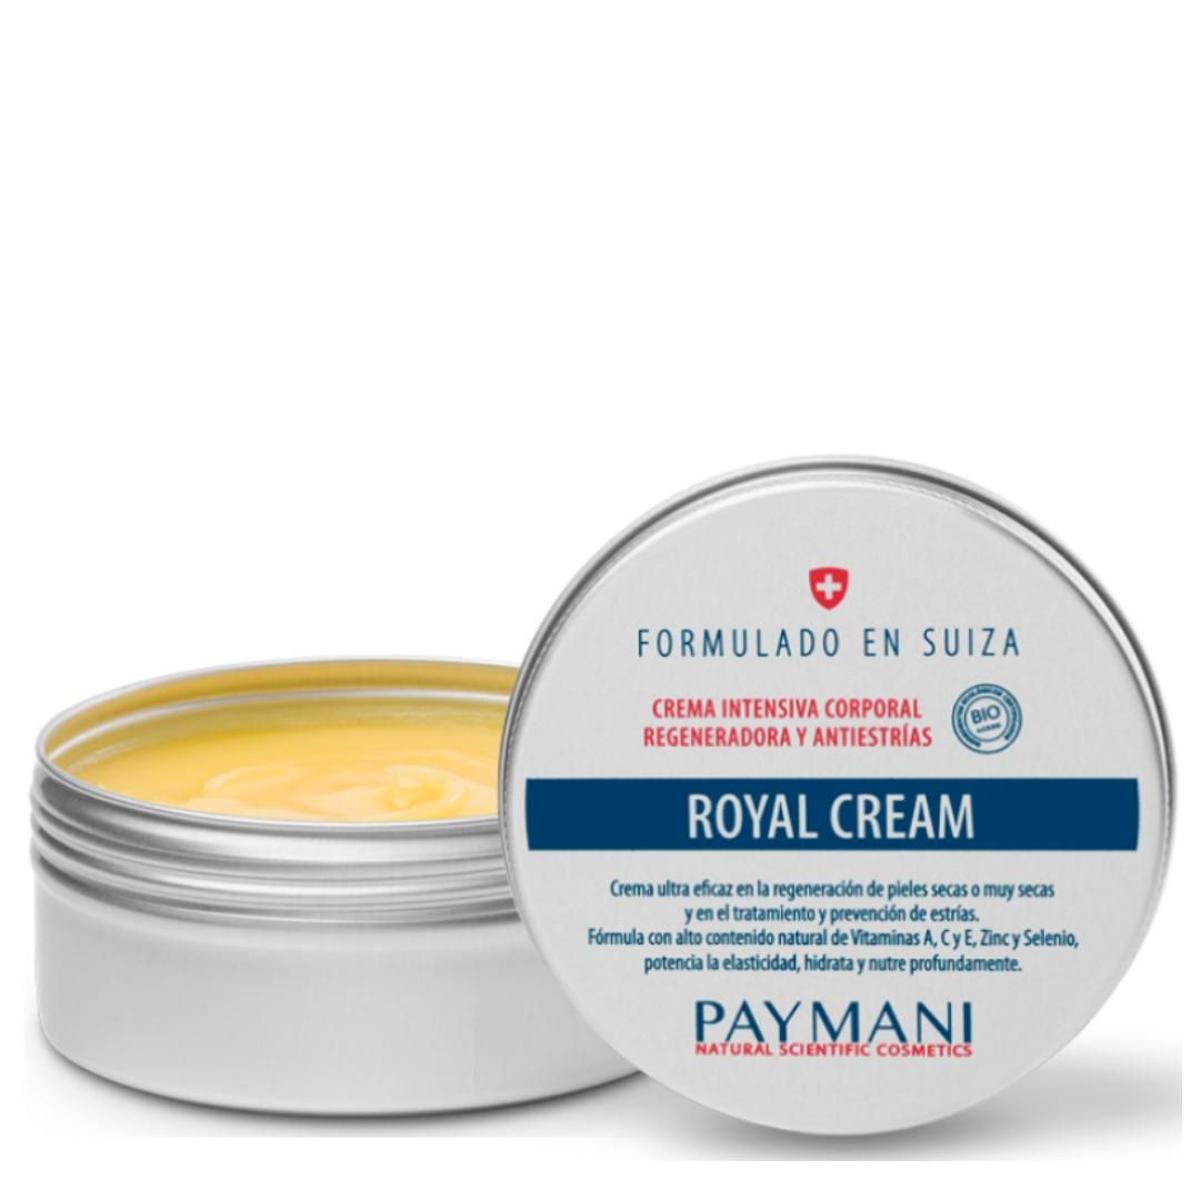 Royal Cream, de Paymani